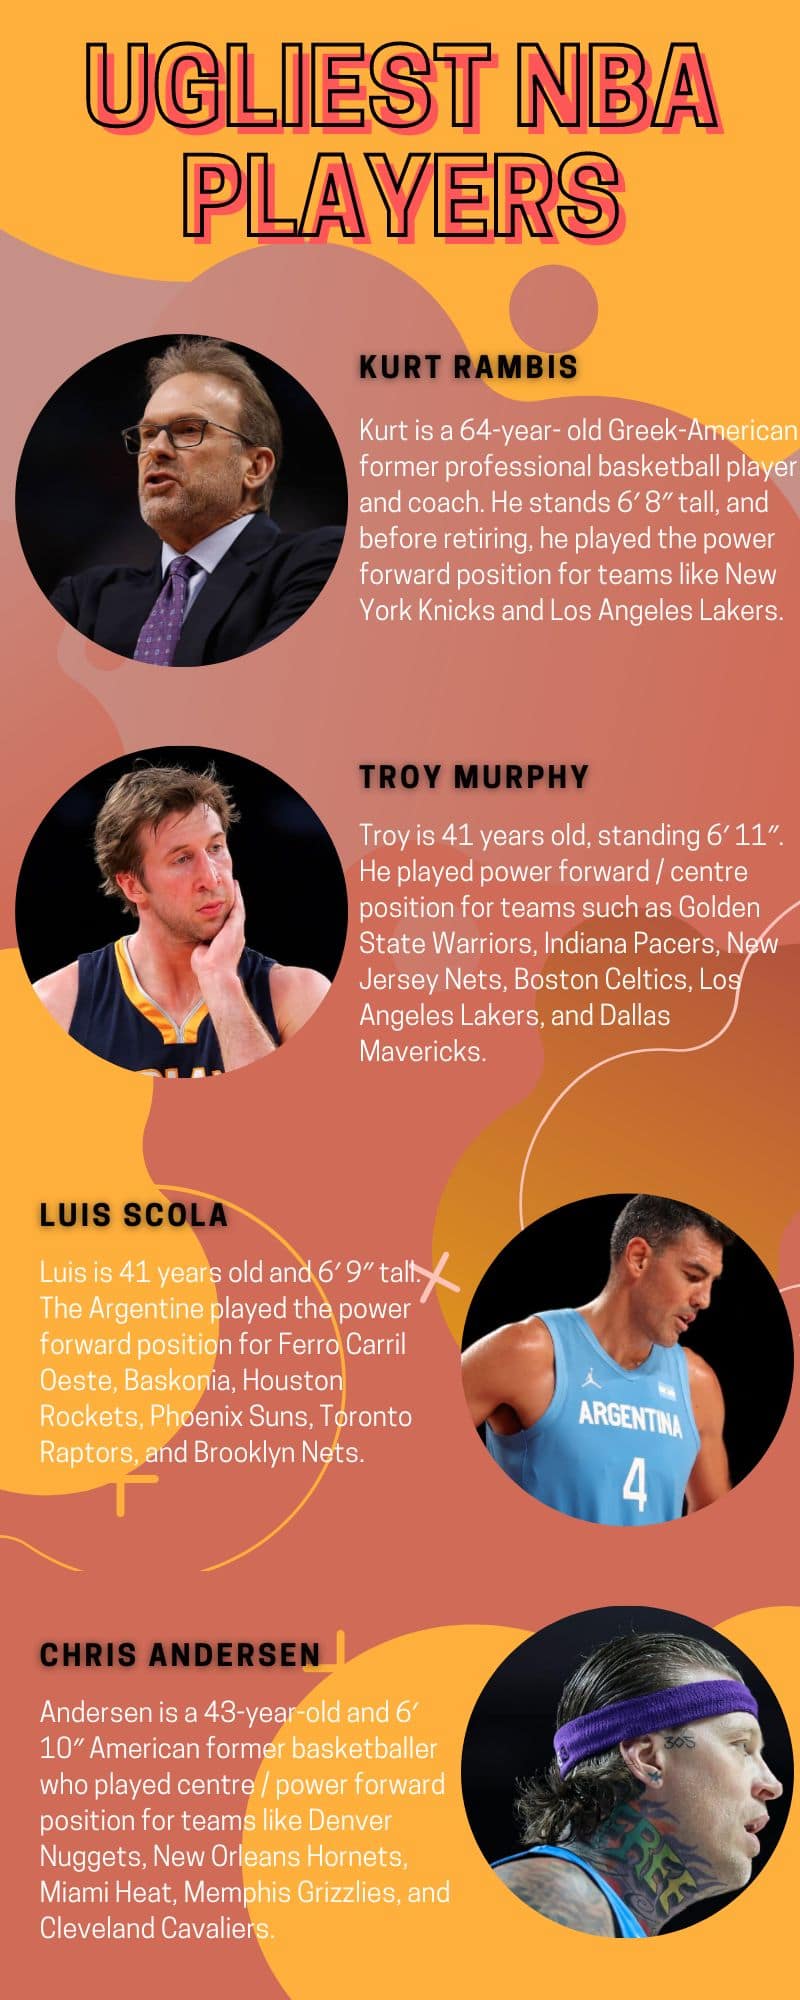 The ugliest NBA players